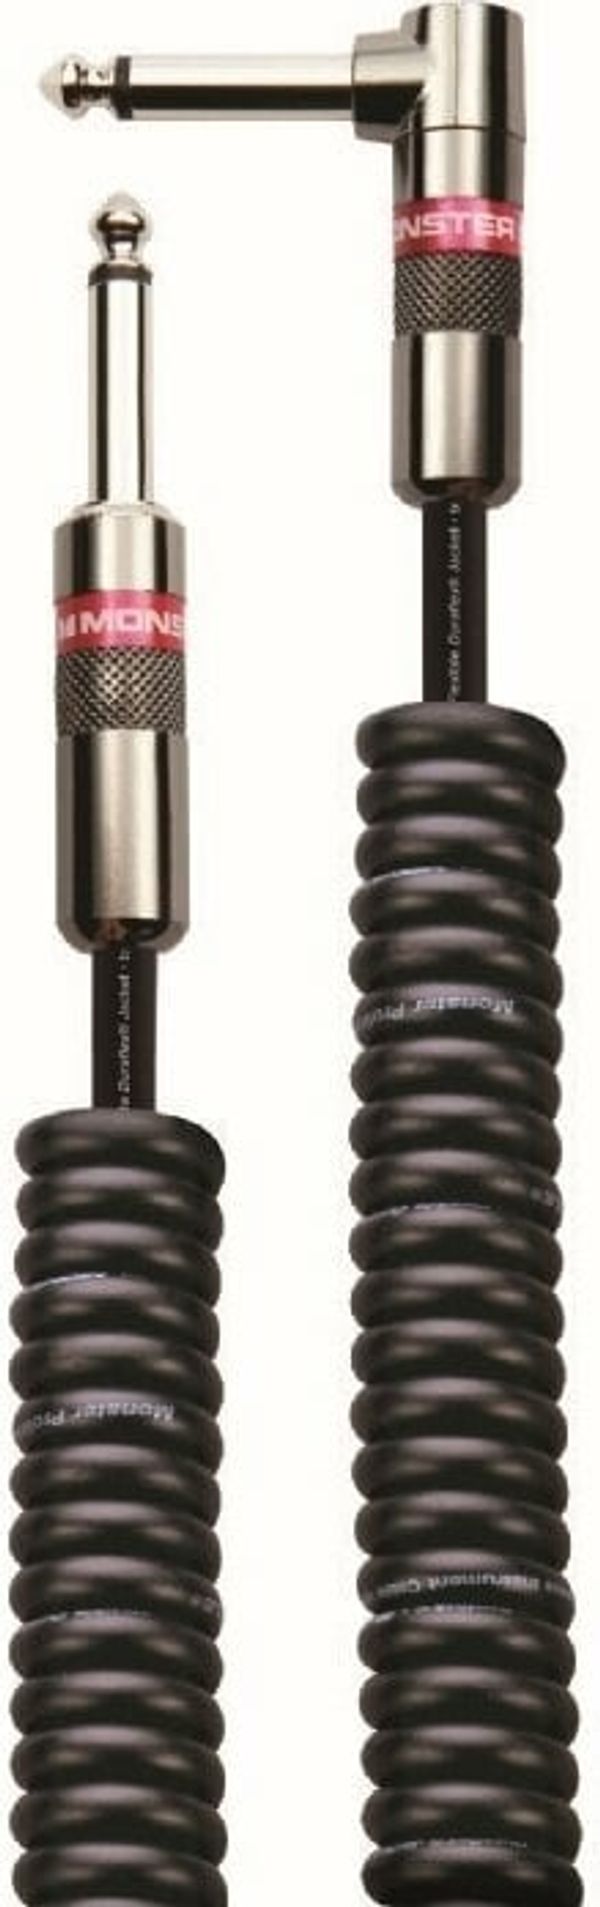 Monster Cable Monster Cable Prolink Classic 21FT Coiled Instrument Cable Črna 6,5 m Kotni - Ravni